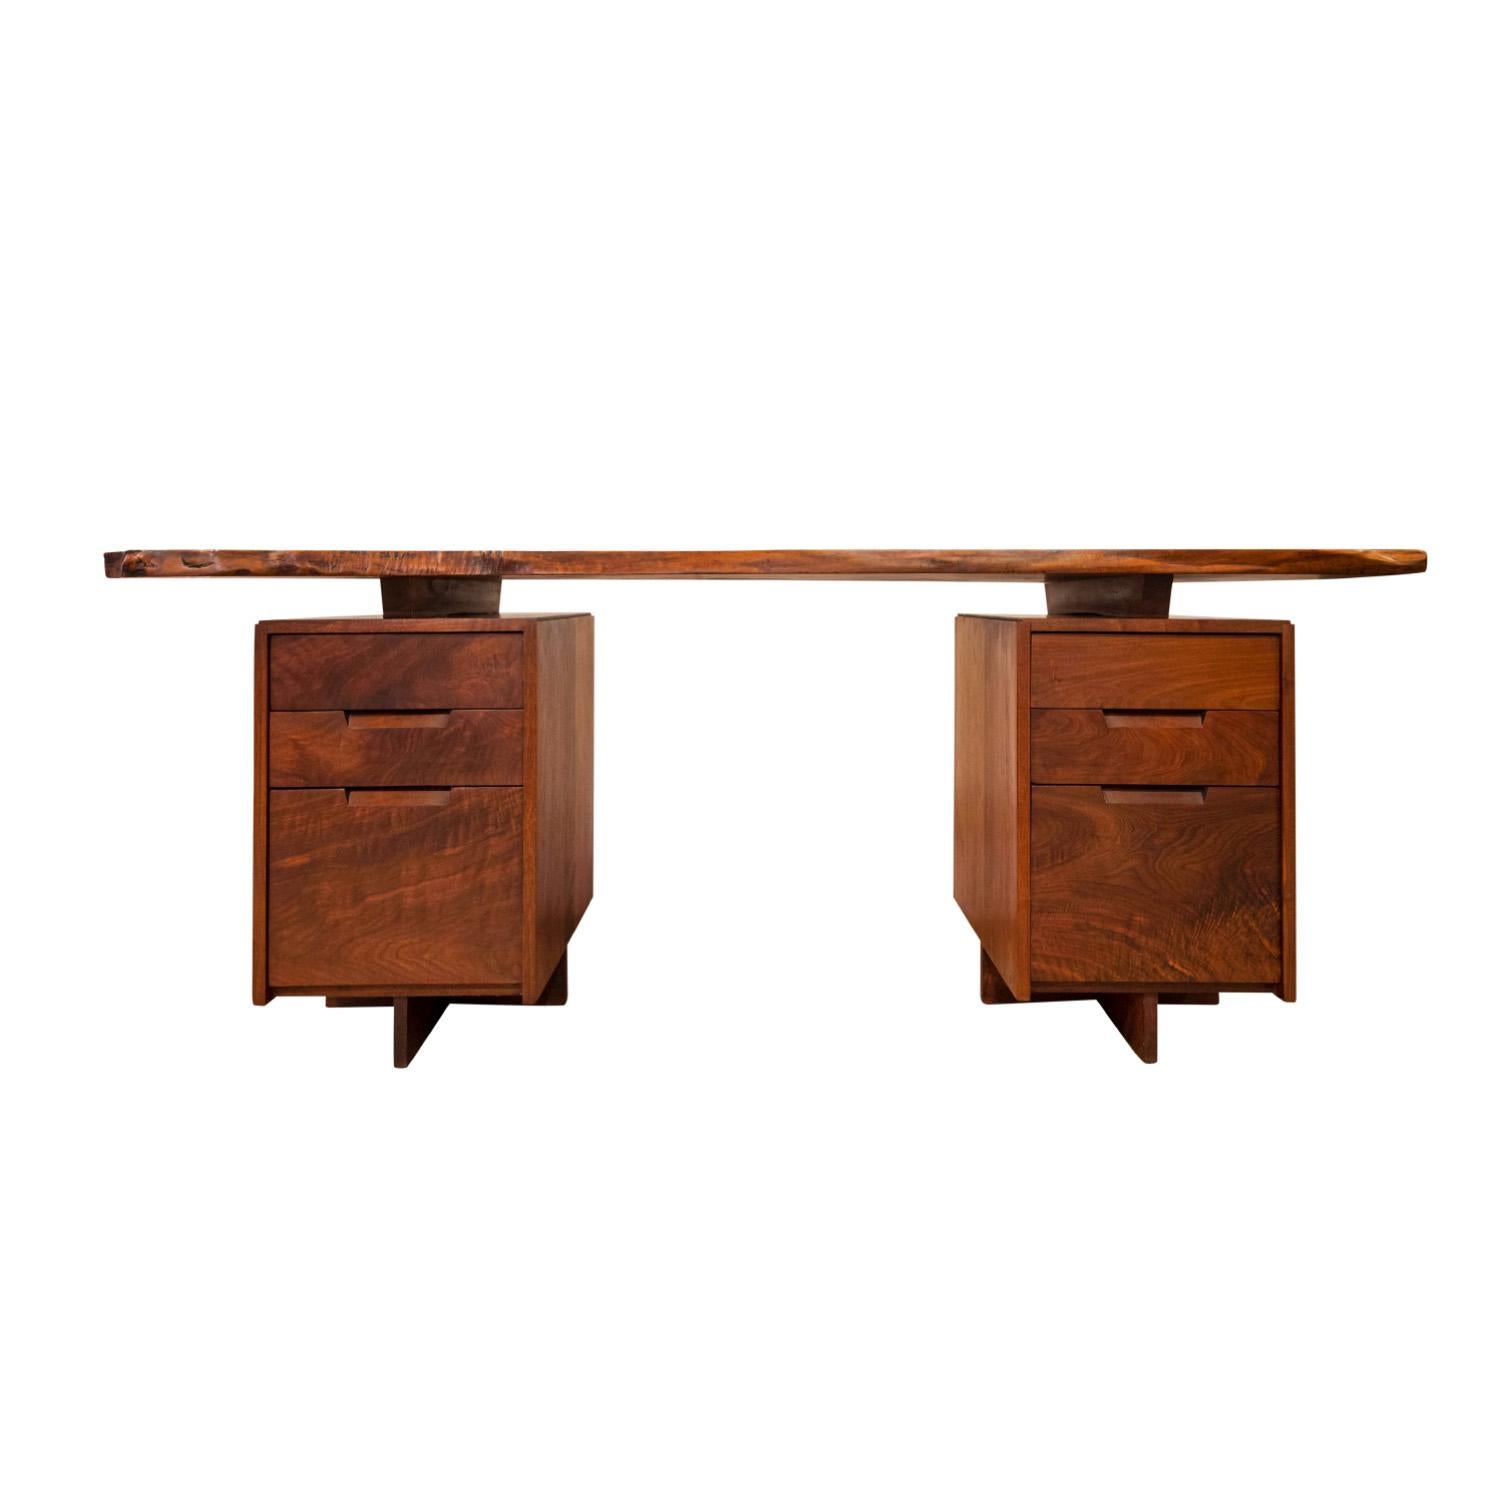 American George Nakashima Rare Free-Edge Double Pedestal Desk in Walnut, 1950s